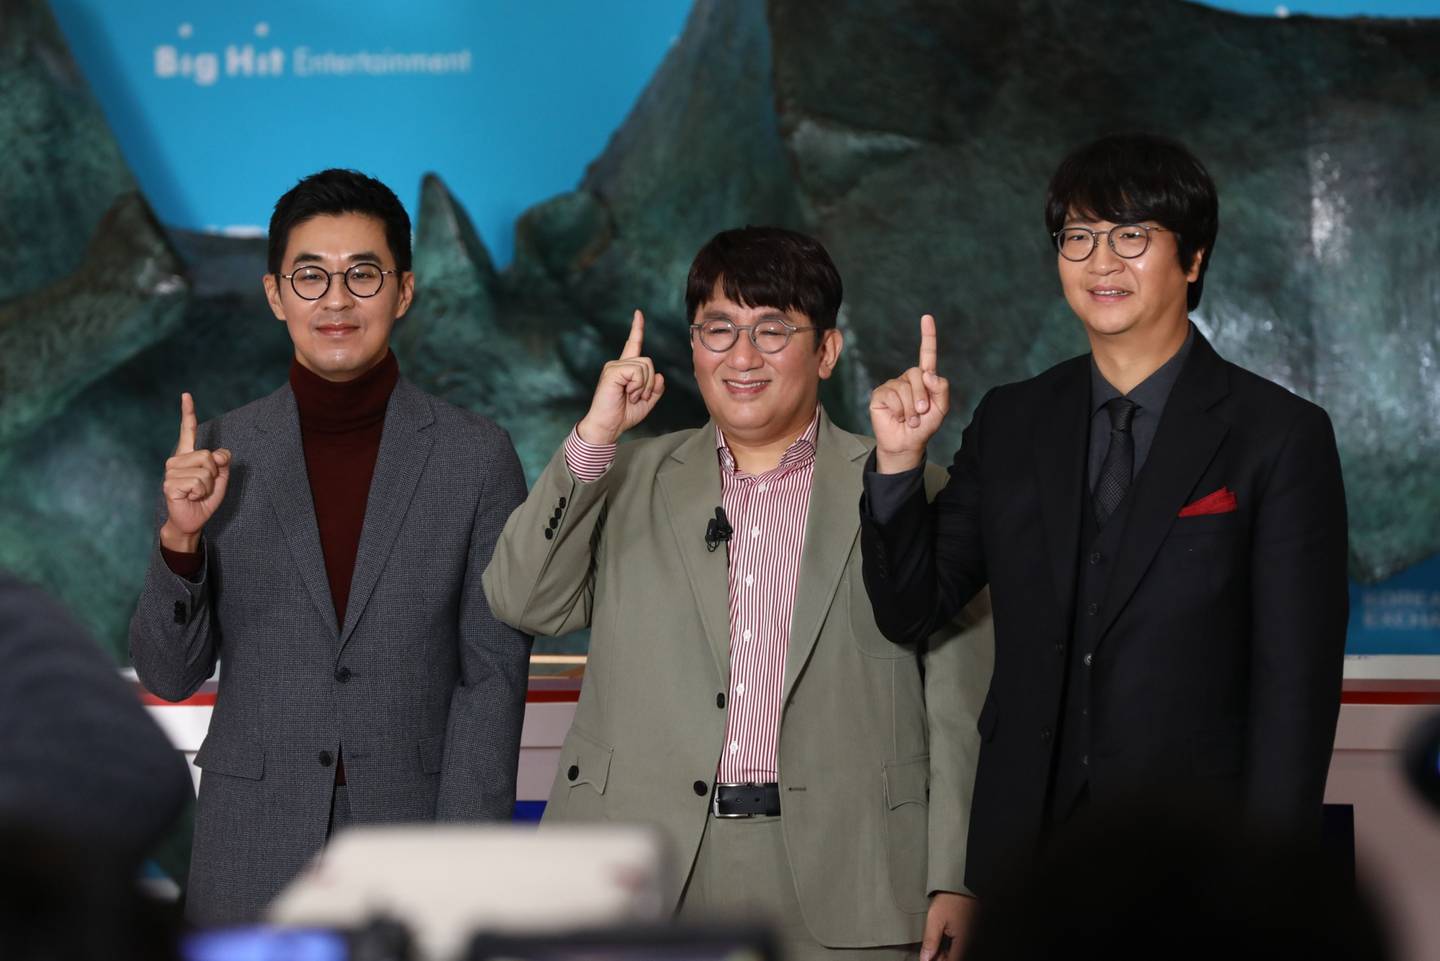 Bang Si-hyuk, fundador de Hybe Co., antes Big Hit Entertainment Co., posa durante la ceremonia de cotización de la empresa en la Bolsa de Corea. Fotógrafo: SeongJoon Cho/Bloomberg